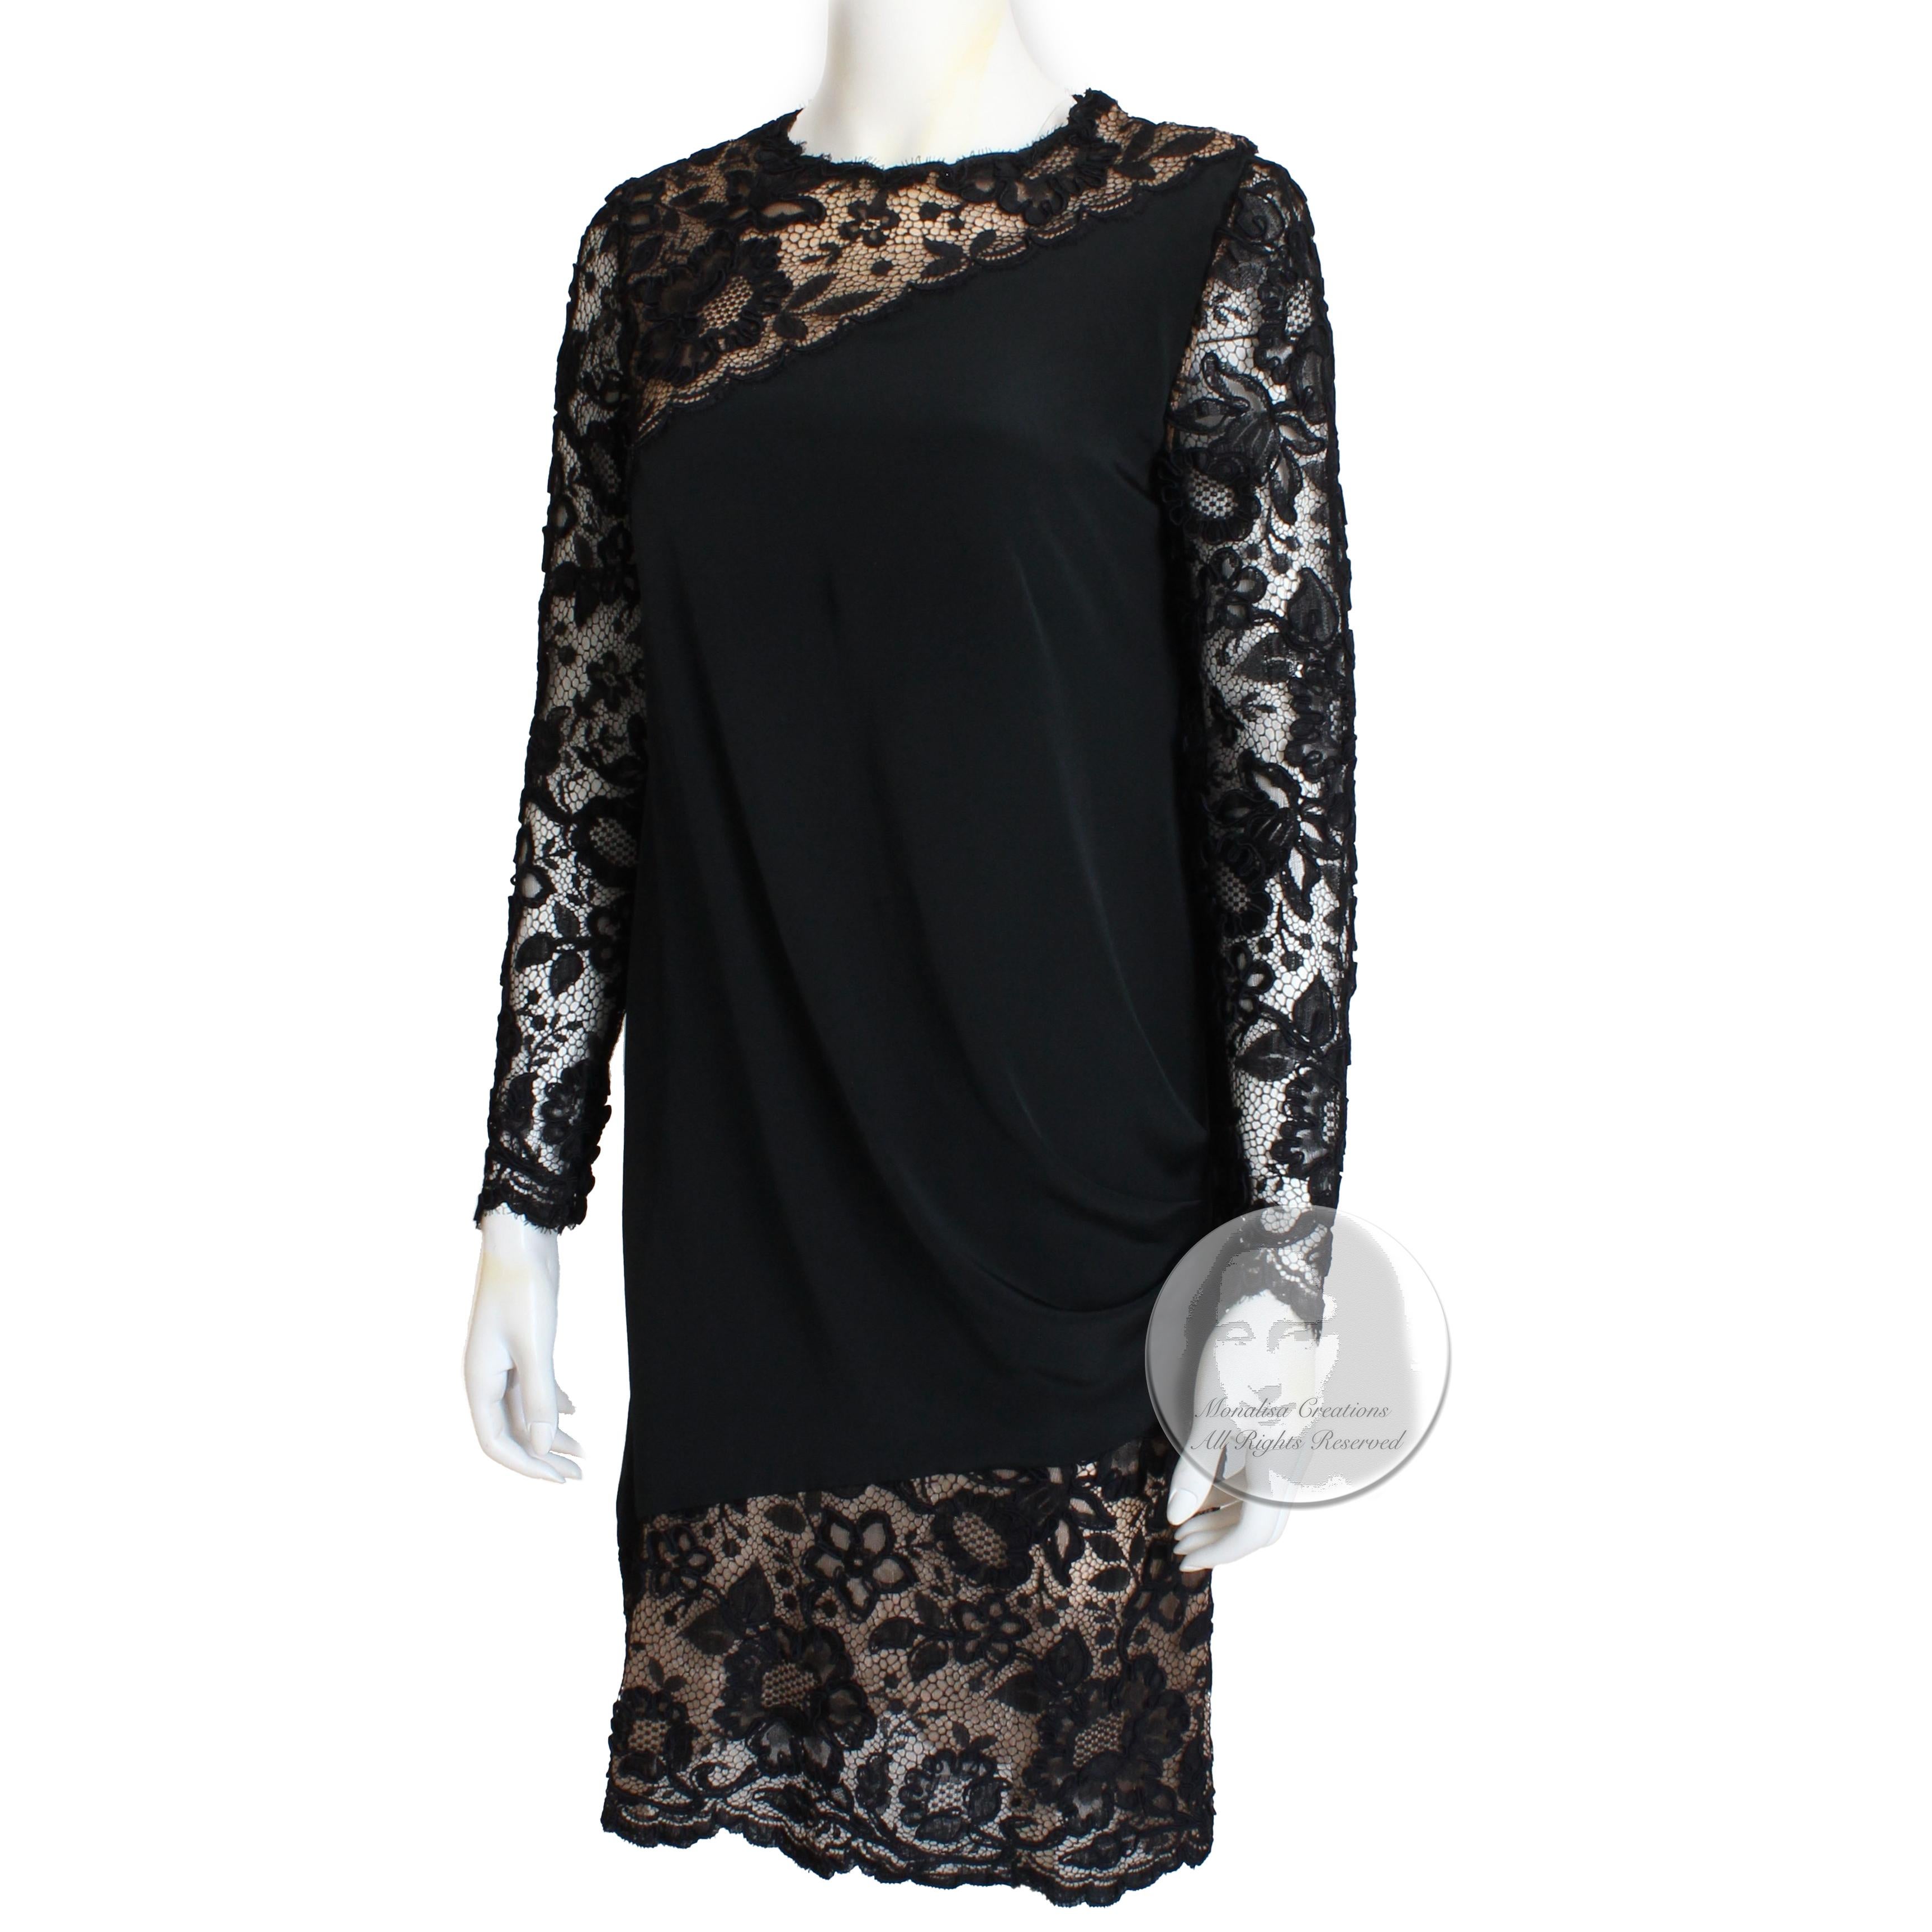 Bill Blass Cocktail Dress Black Illusion Lace Formal 70s Little Black Dress  For Sale 2